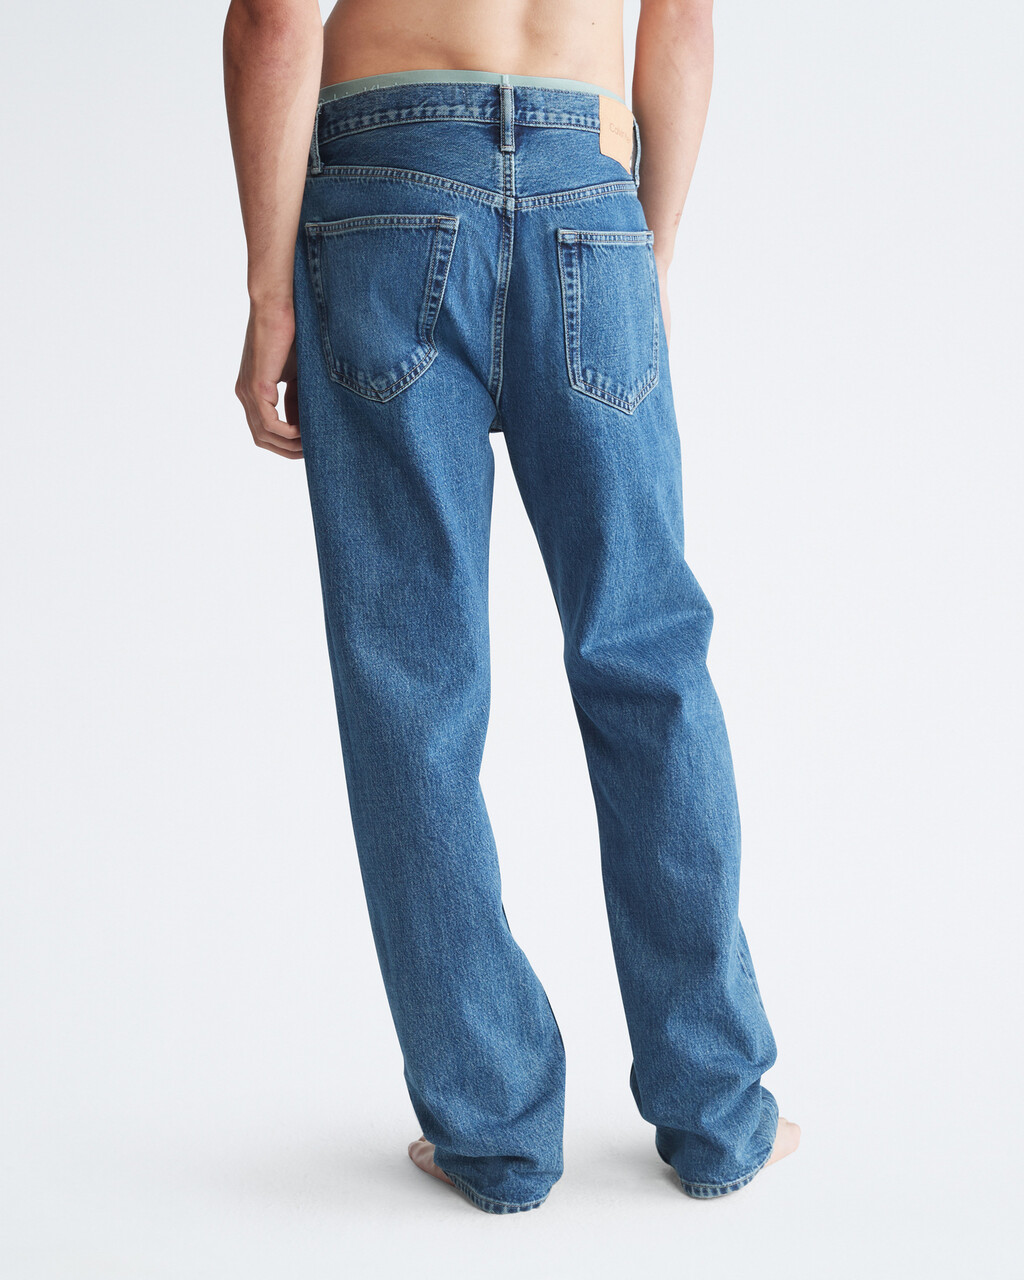 Standards Straight Fit Stone Indigo Selvedge Jeans, HARBOR BLUE SELVEDGE, hi-res